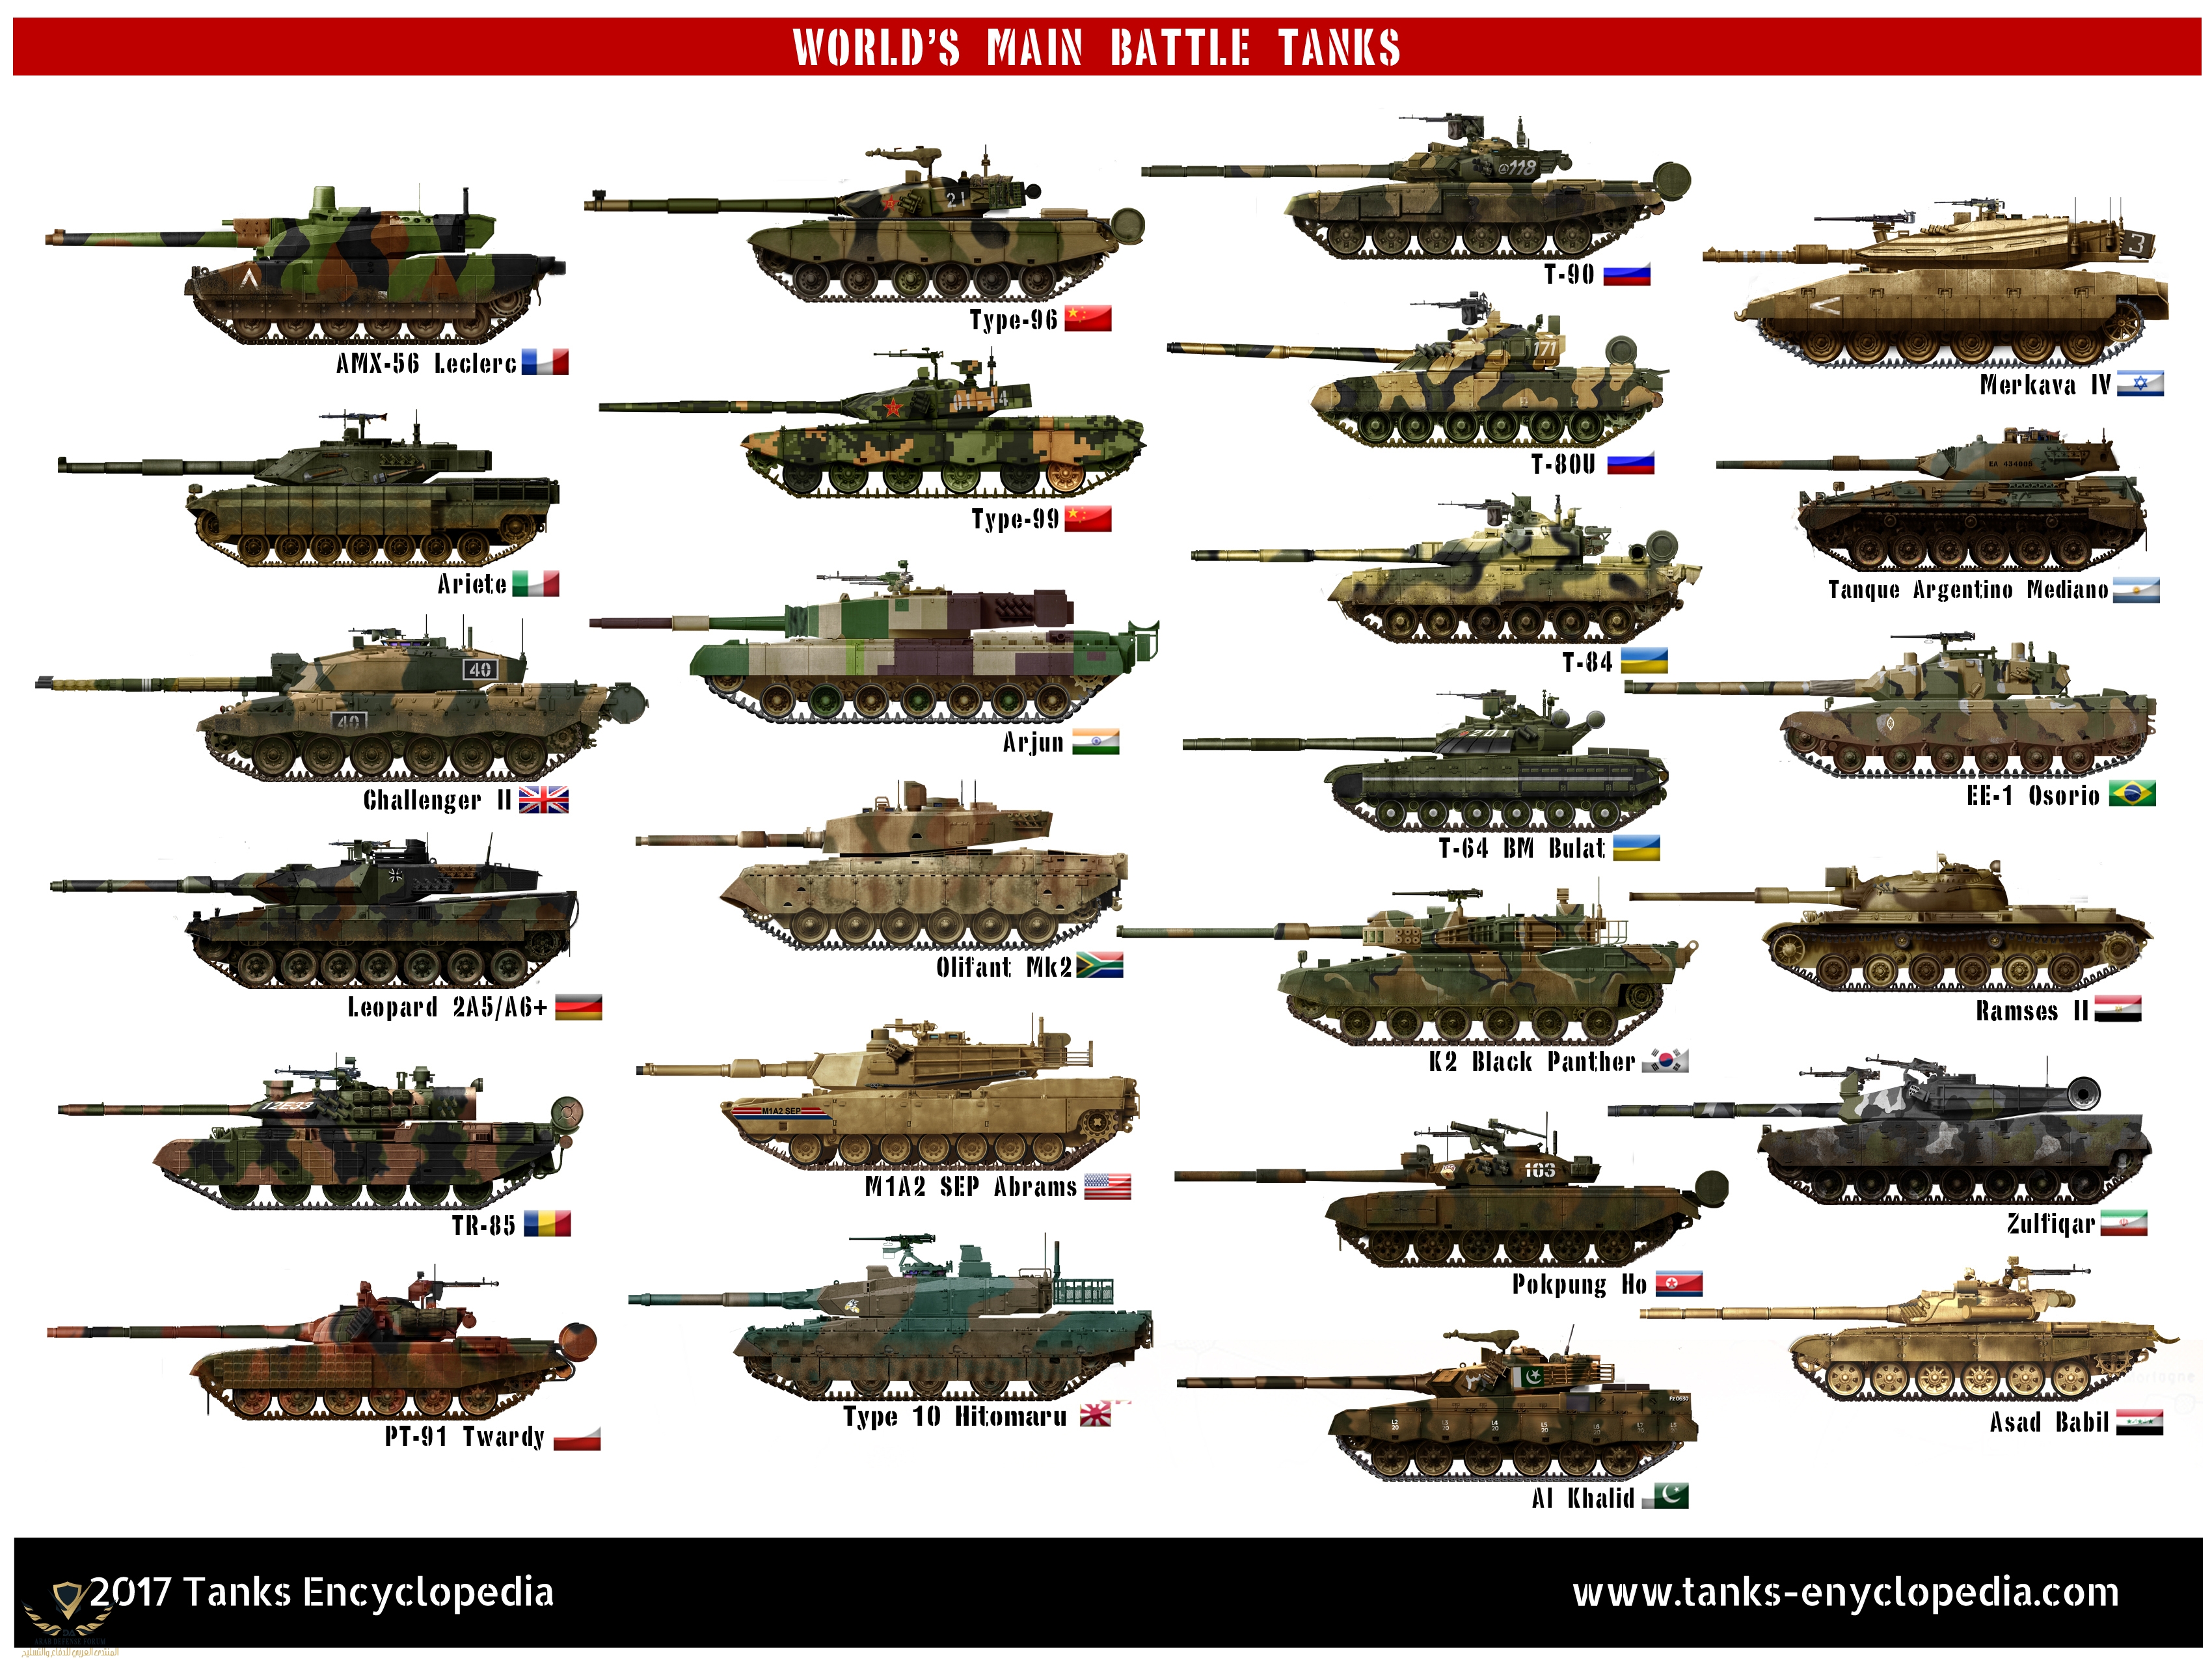 Worlds-Main-Battle-Tanks-Poster-print-small2.jpg